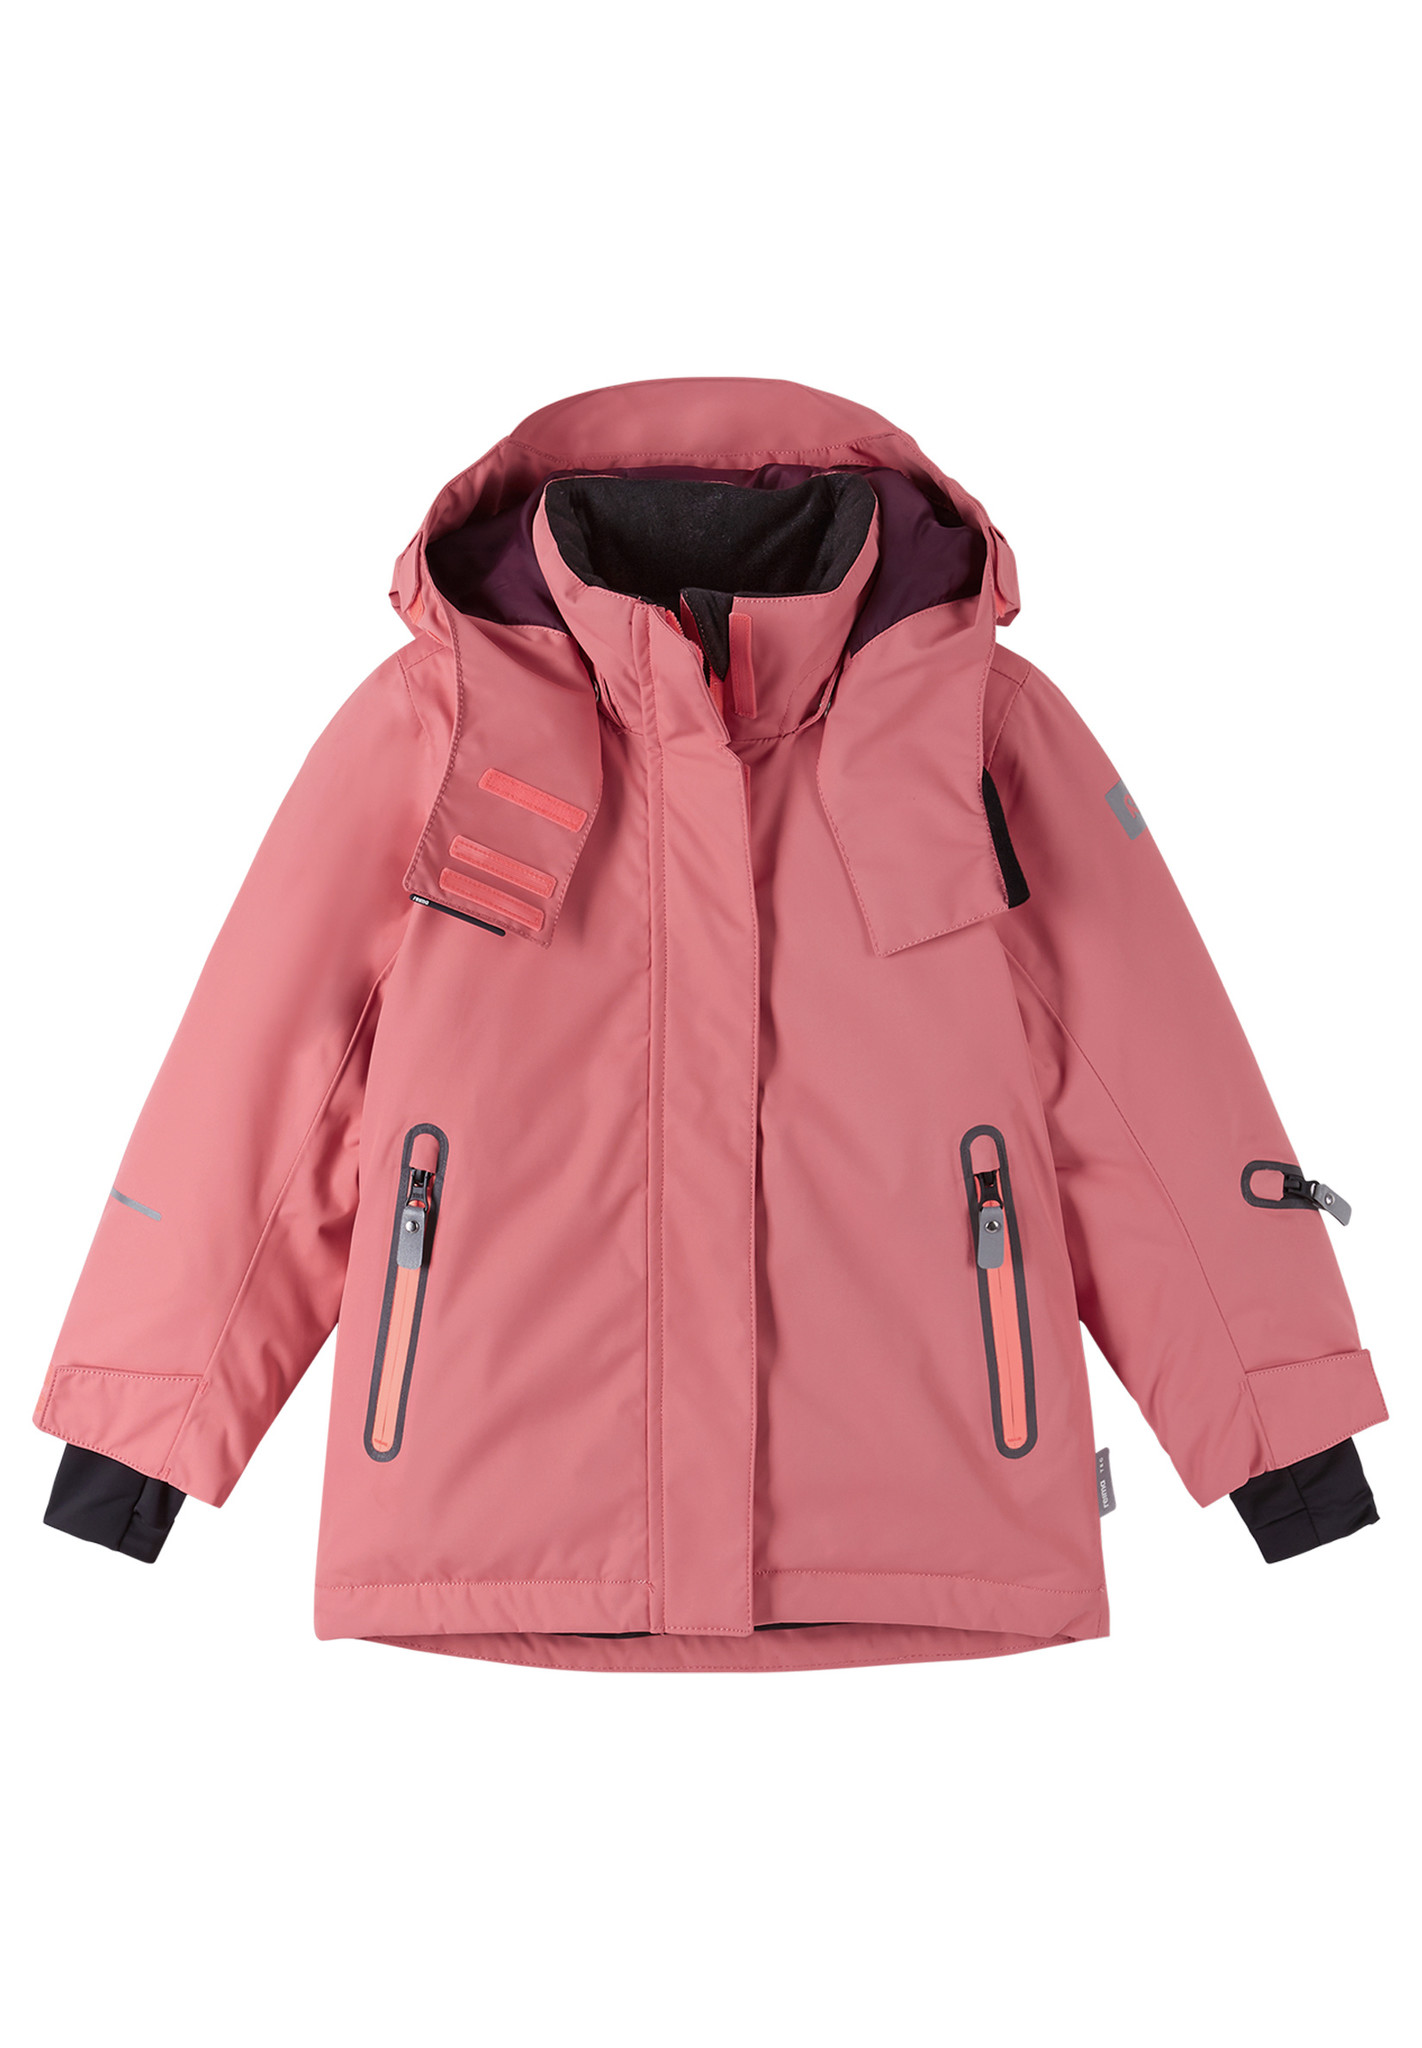 Reimatec Kinder Skijacke Kiiruna Pink coral | Jacken